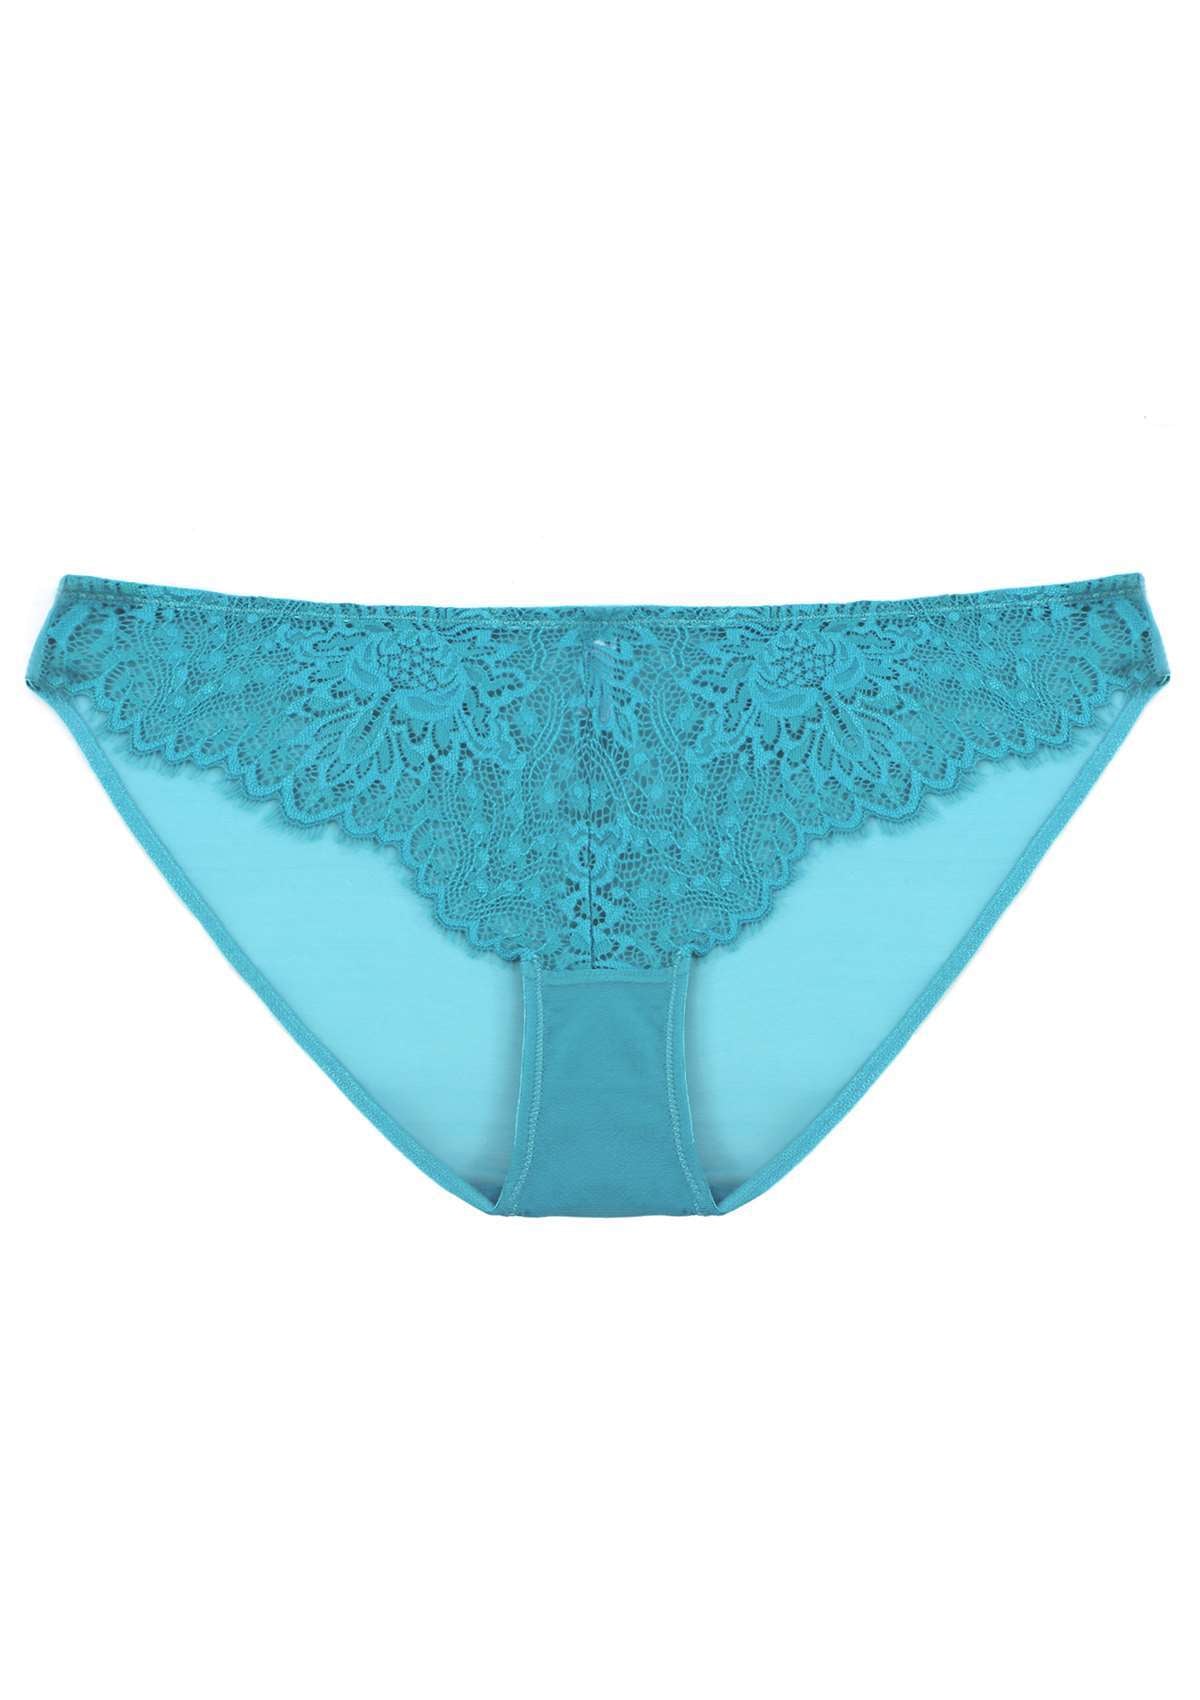 HSIA Sunflower Exquisite Lace Bikini Underwear - M / Purple